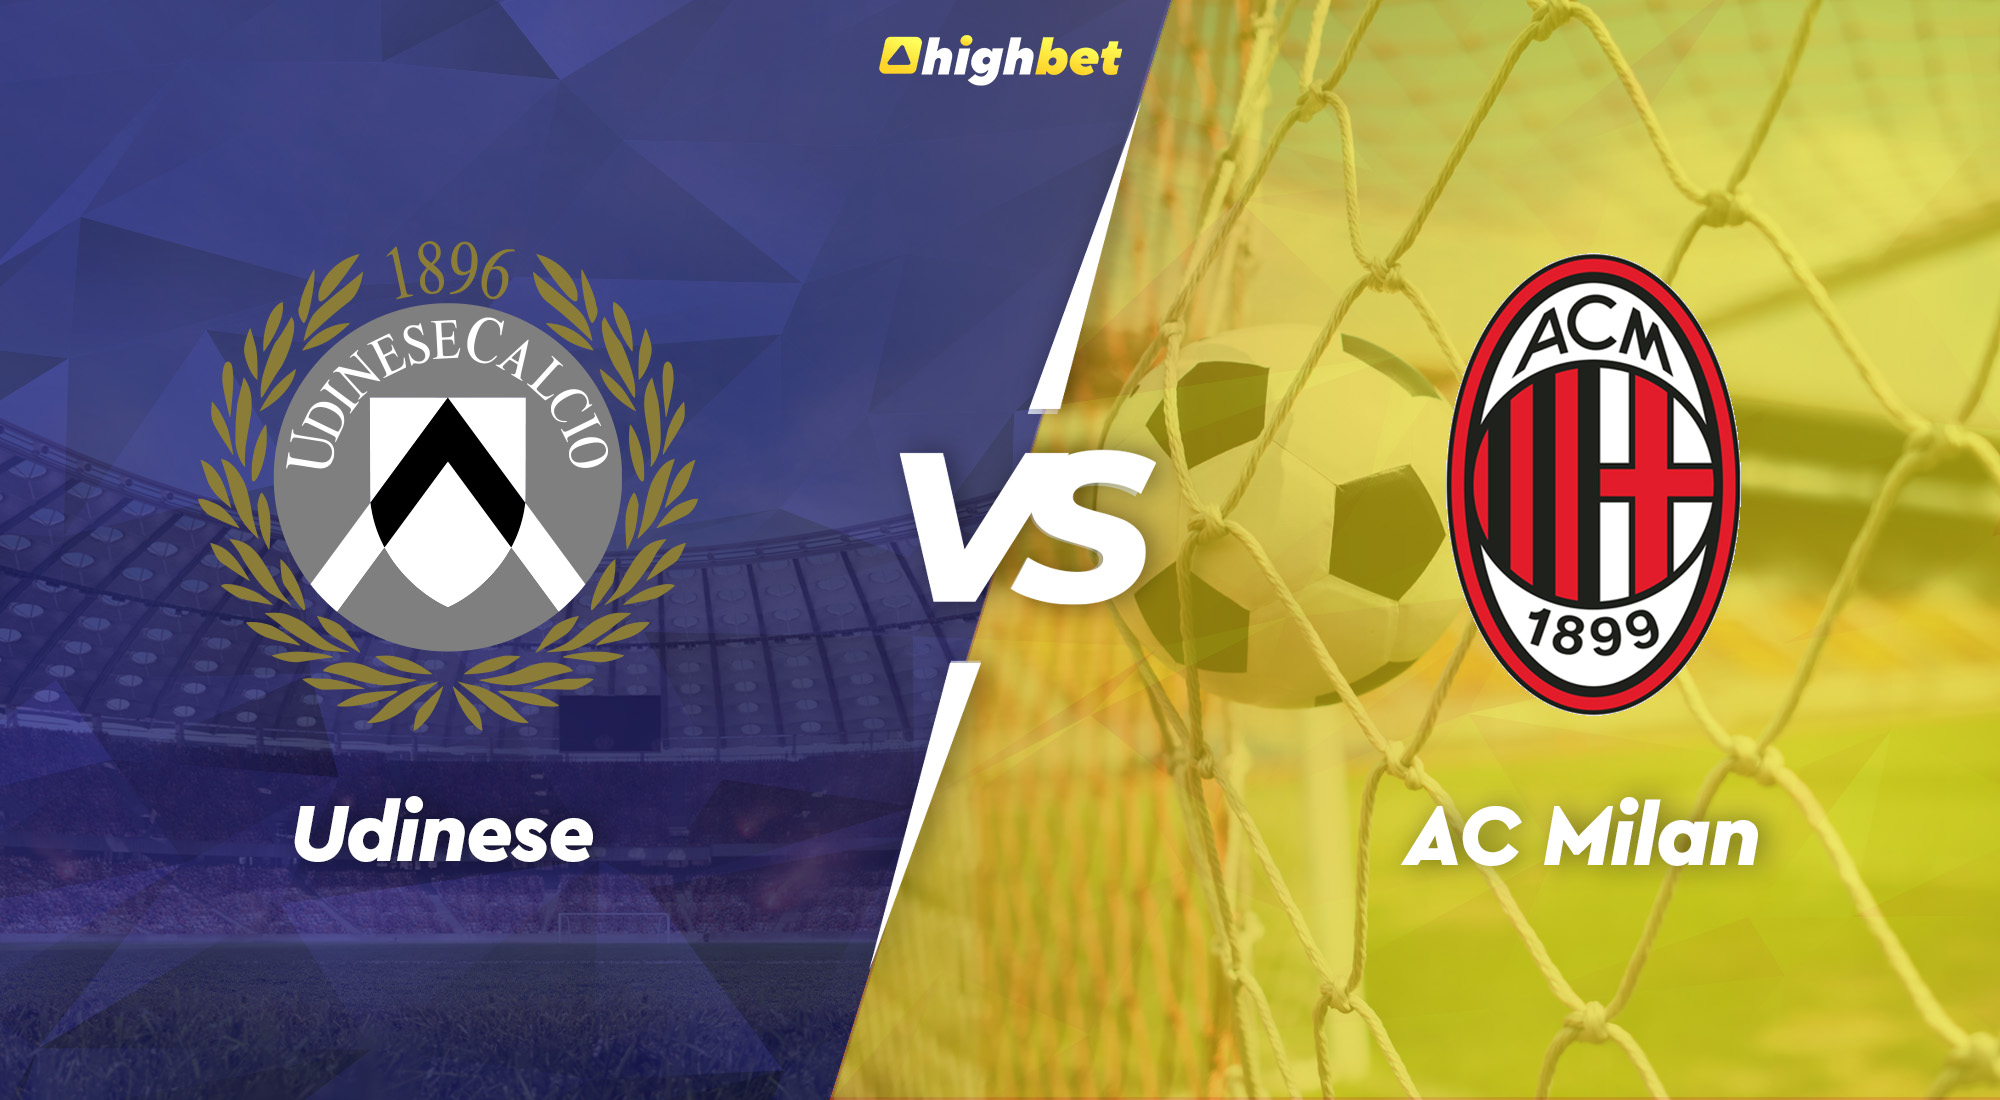 Udinese vs AC Milan - highbet Serie A Pre-Match Analysis